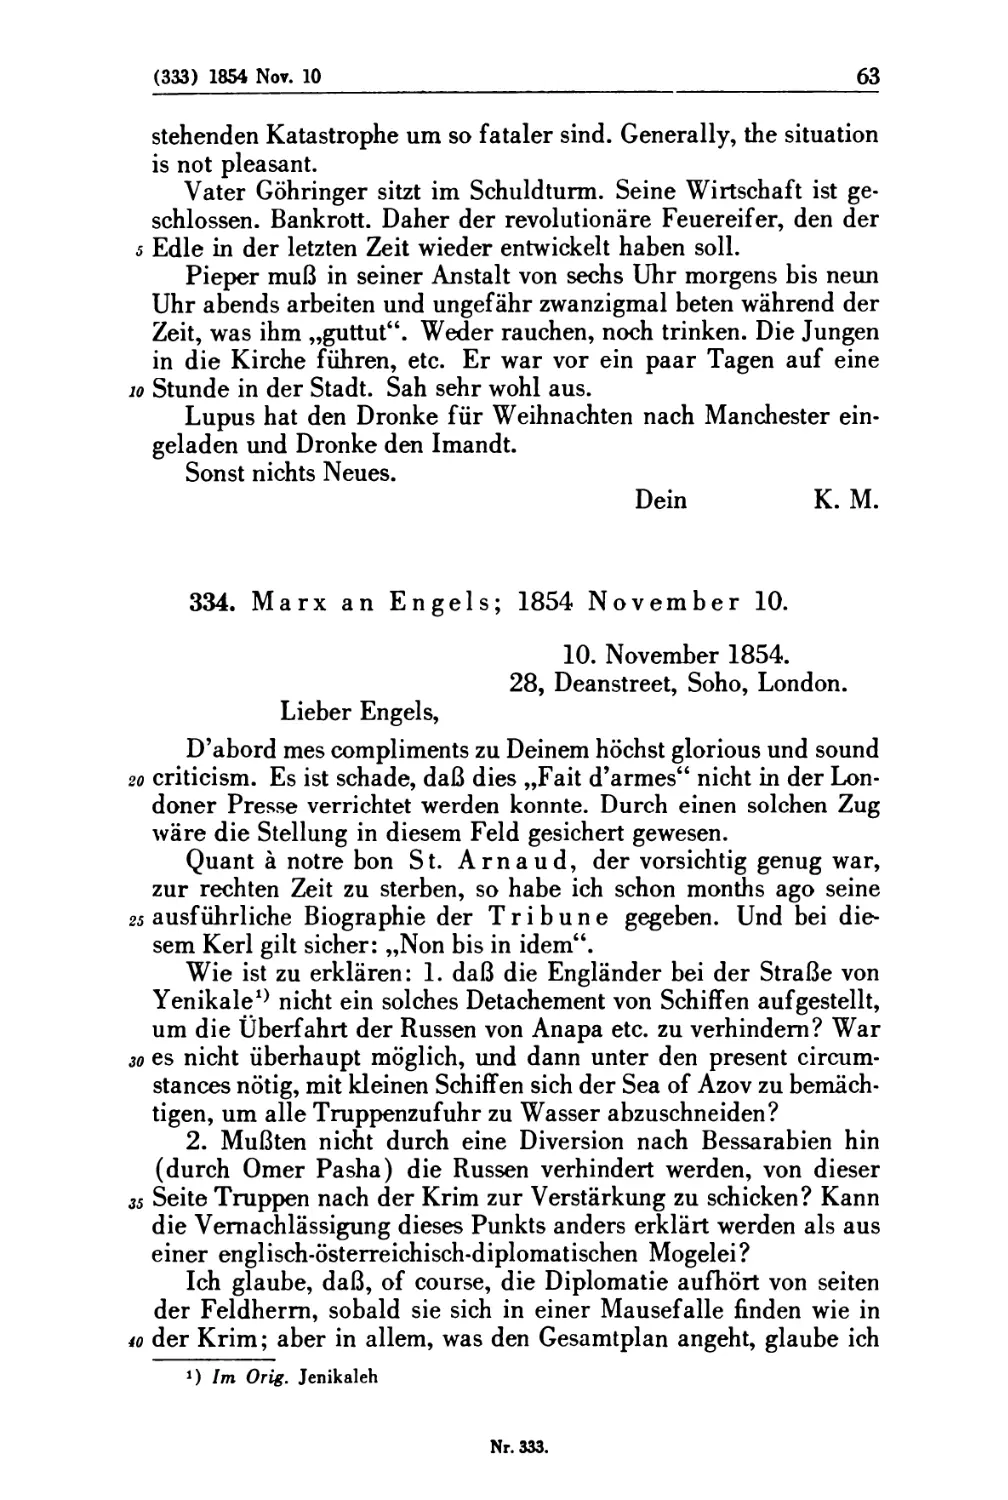 334. Marx an Engels; 1854 November 10